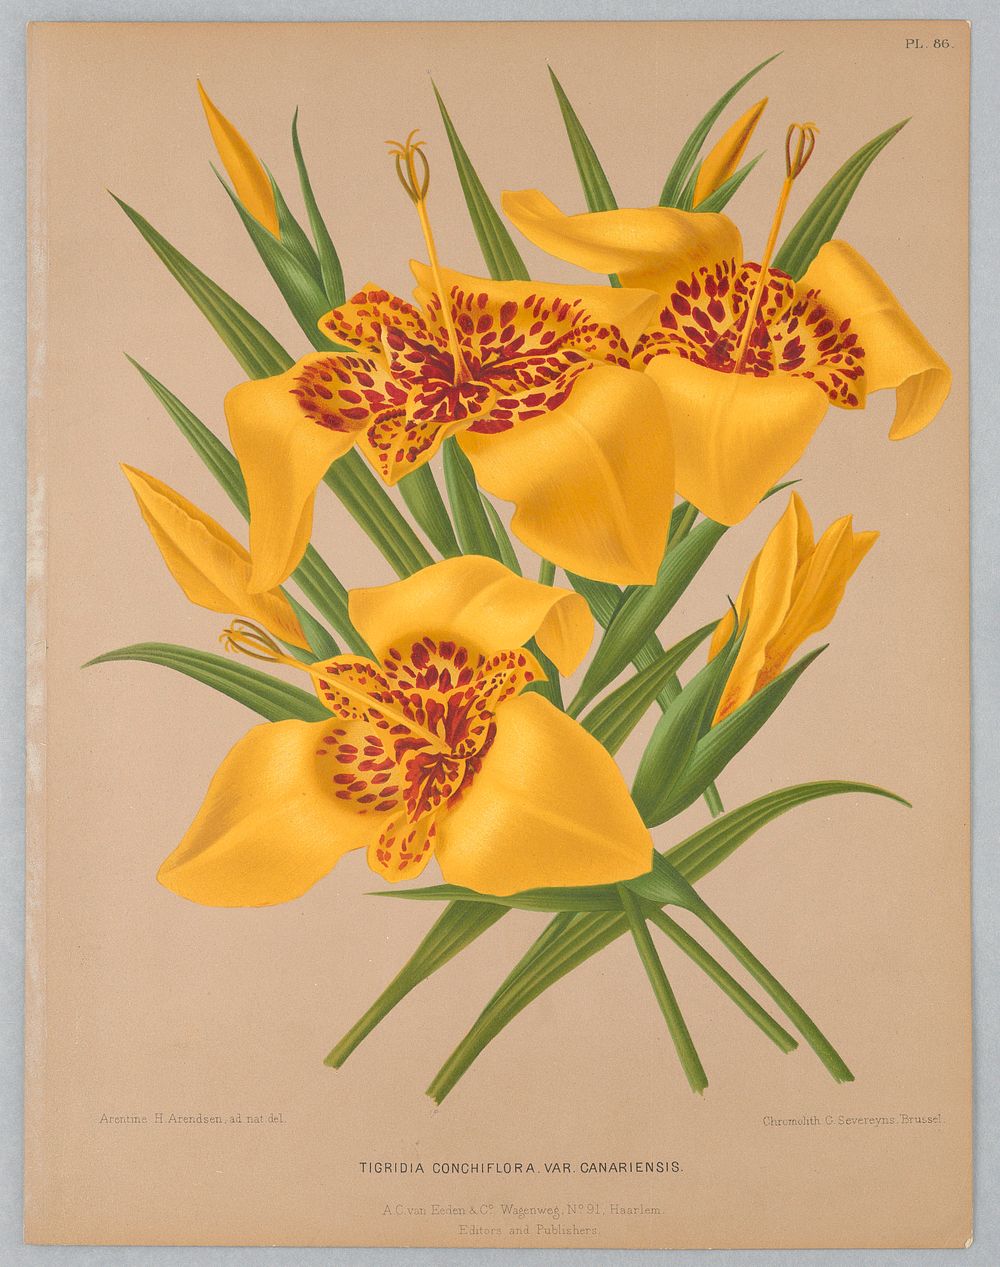 Tigridia Conchiflora Var. Canariensis, Plate 86 from A. C. Van Eeden's "Flora of Haarlem"